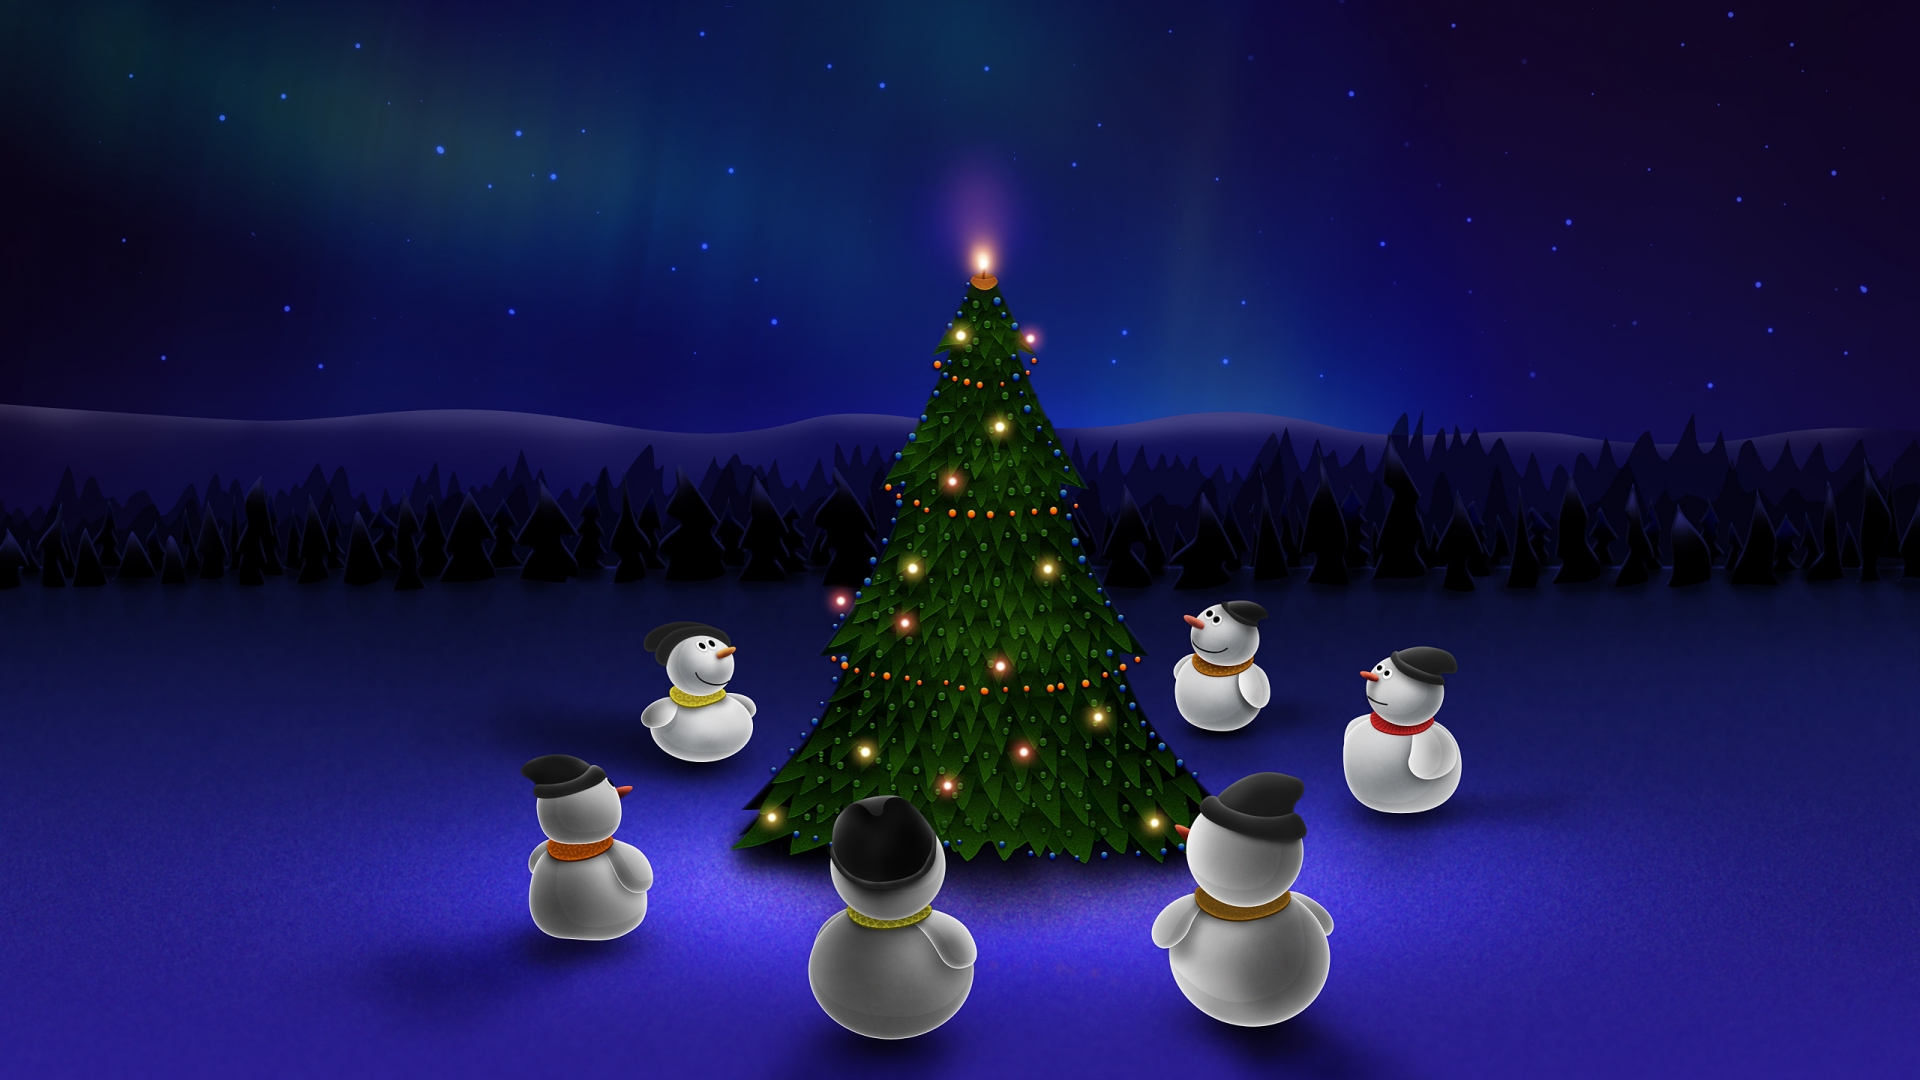 Snowman Around Christmas Tree for 1920 x 1080 HDTV 1080p resolution